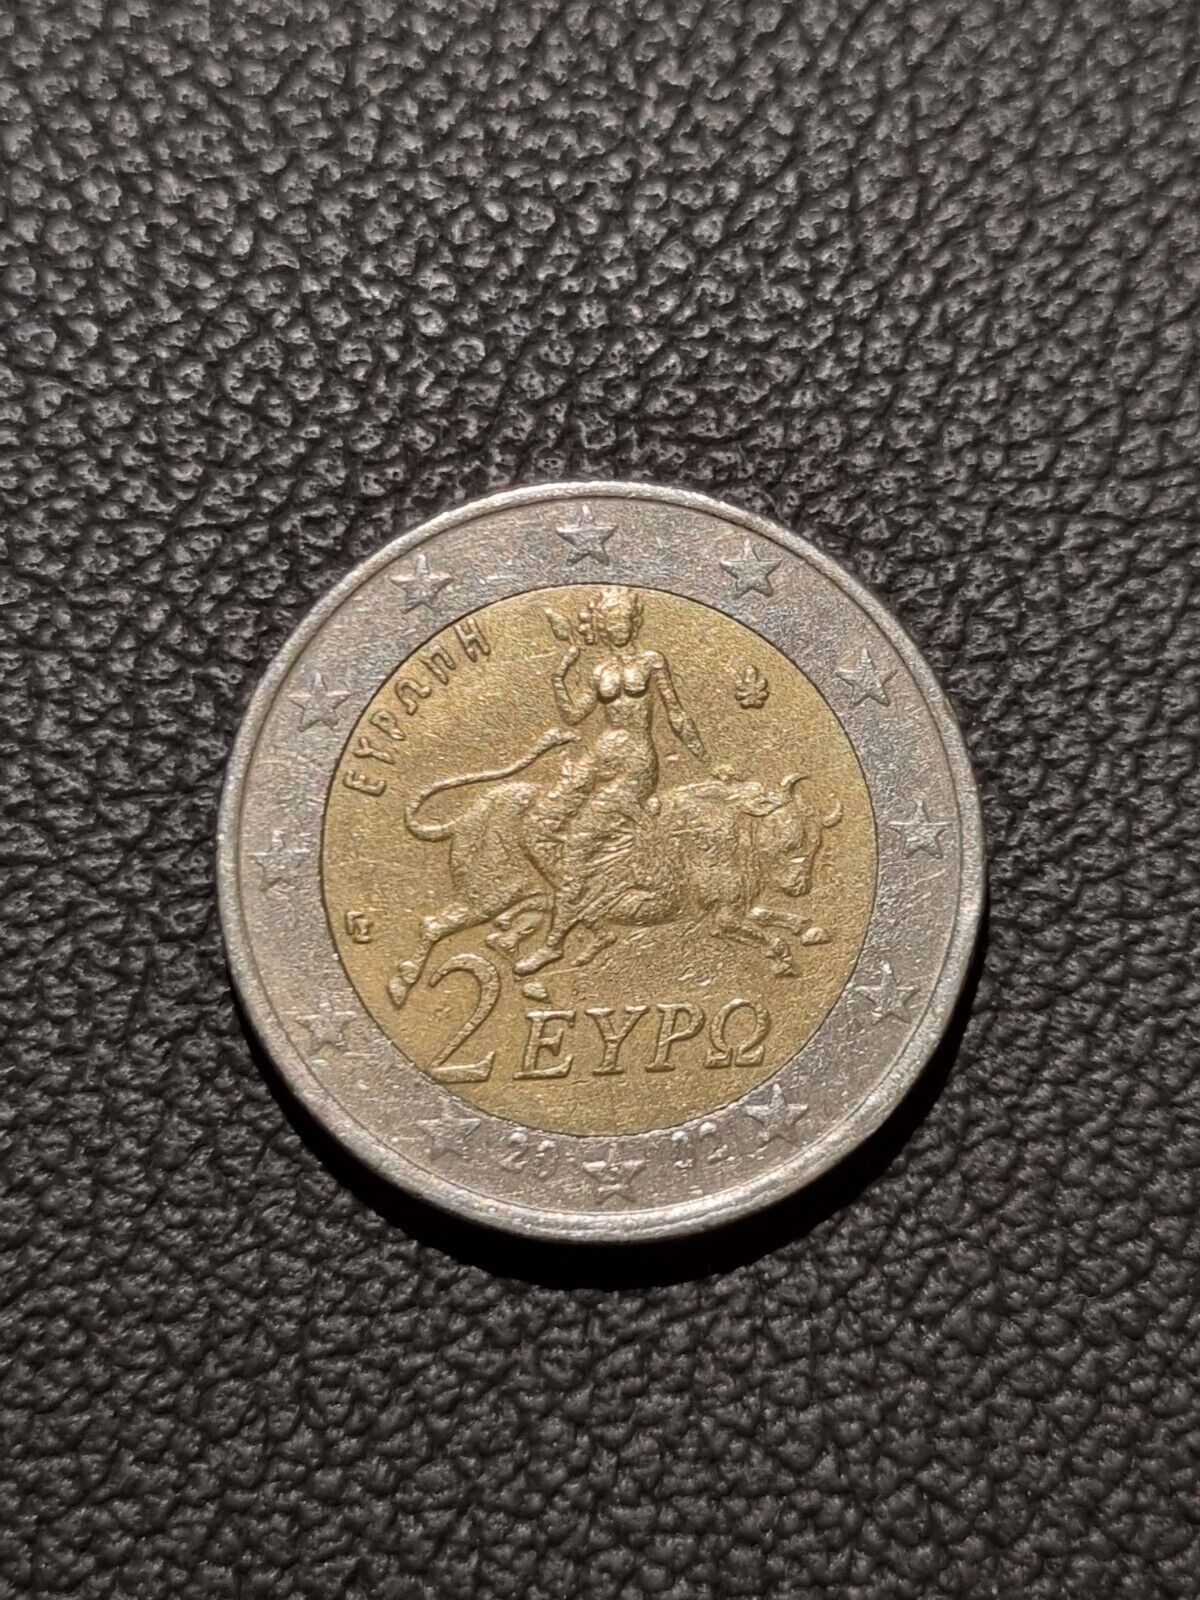 GREECE 2 EURO COIN 2002 foulty \'S\' struck into bottom star